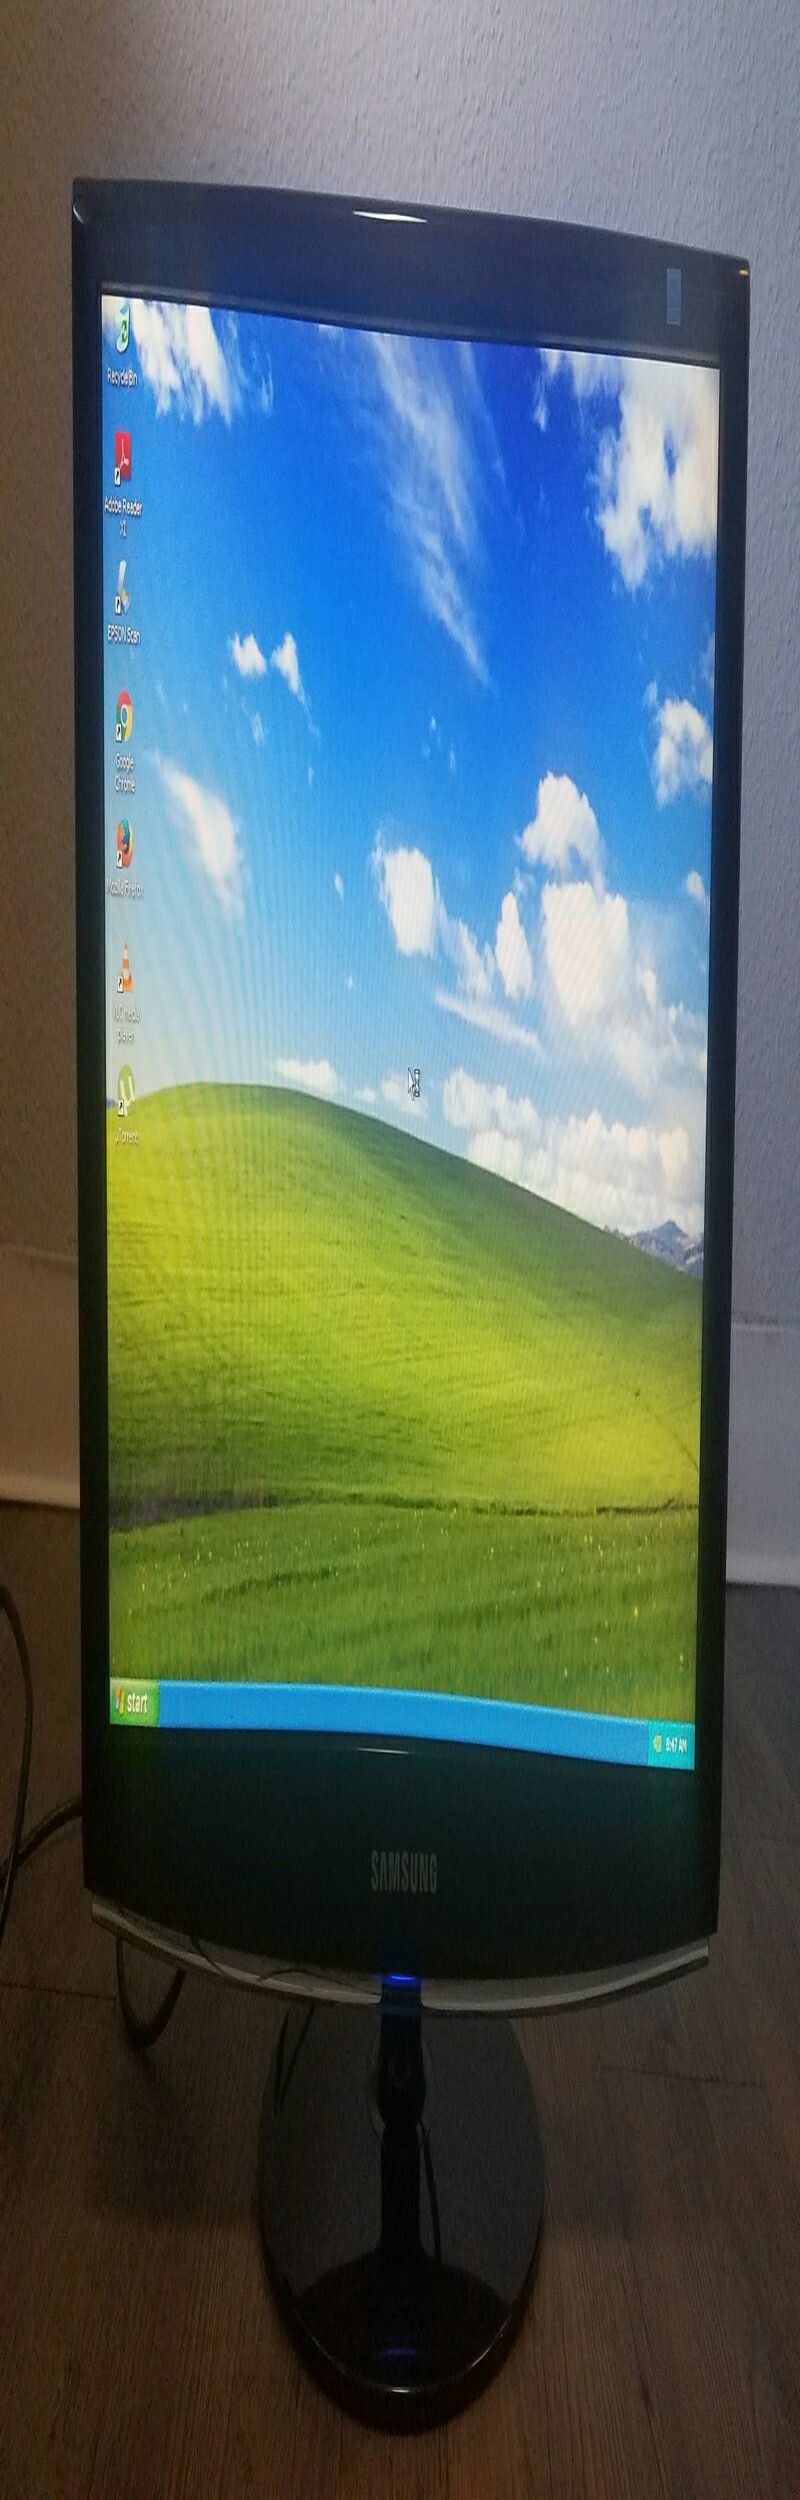 Samsung 20-Inch Widescreen LCD Monitor, Black